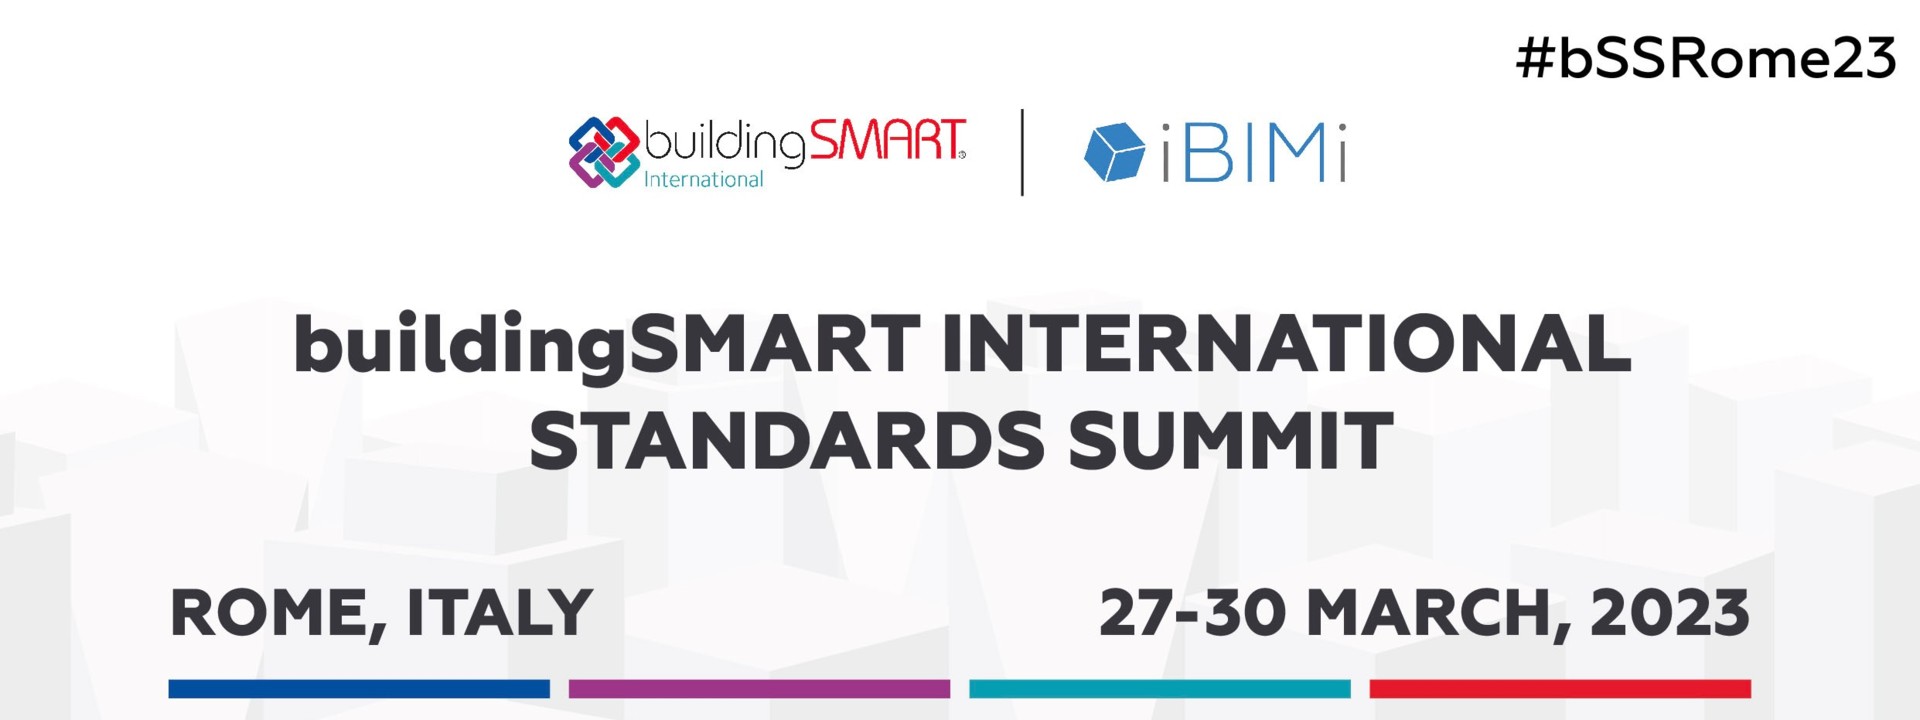 buildingSMART International Standards Summit